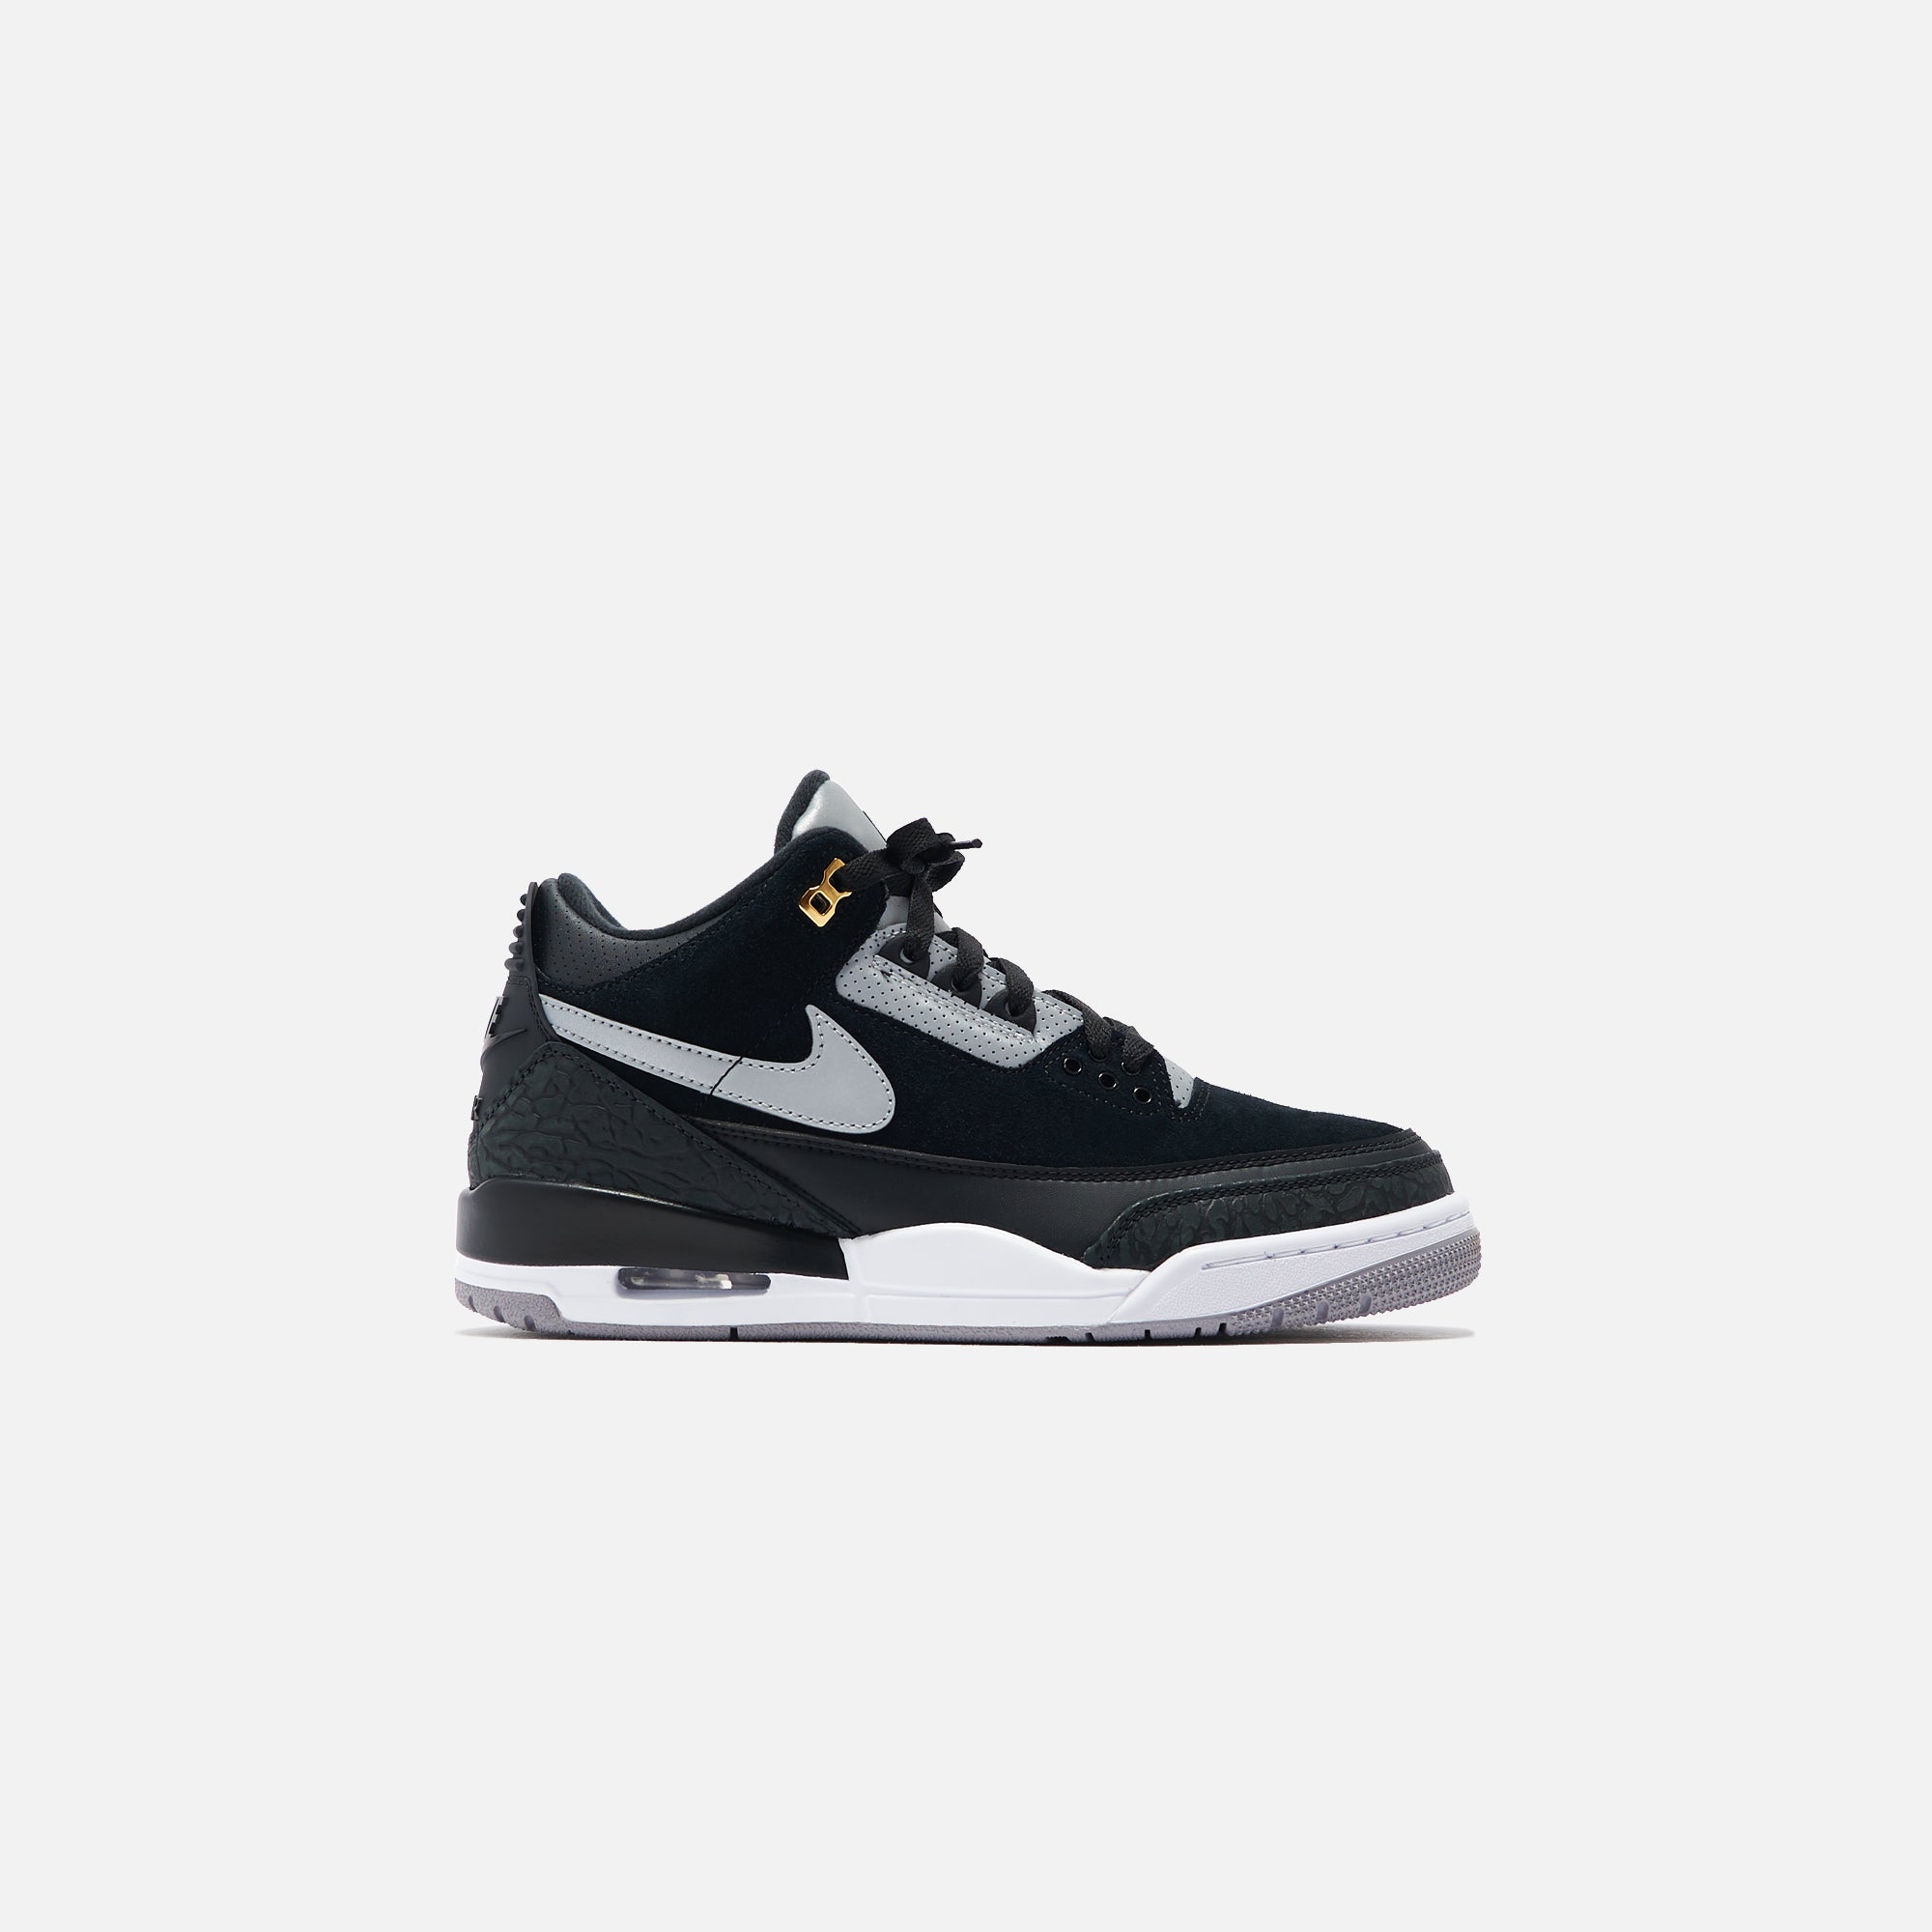 Nike Air Jordan 3 Retro TH SP - Black / Cement Grey / Metallic